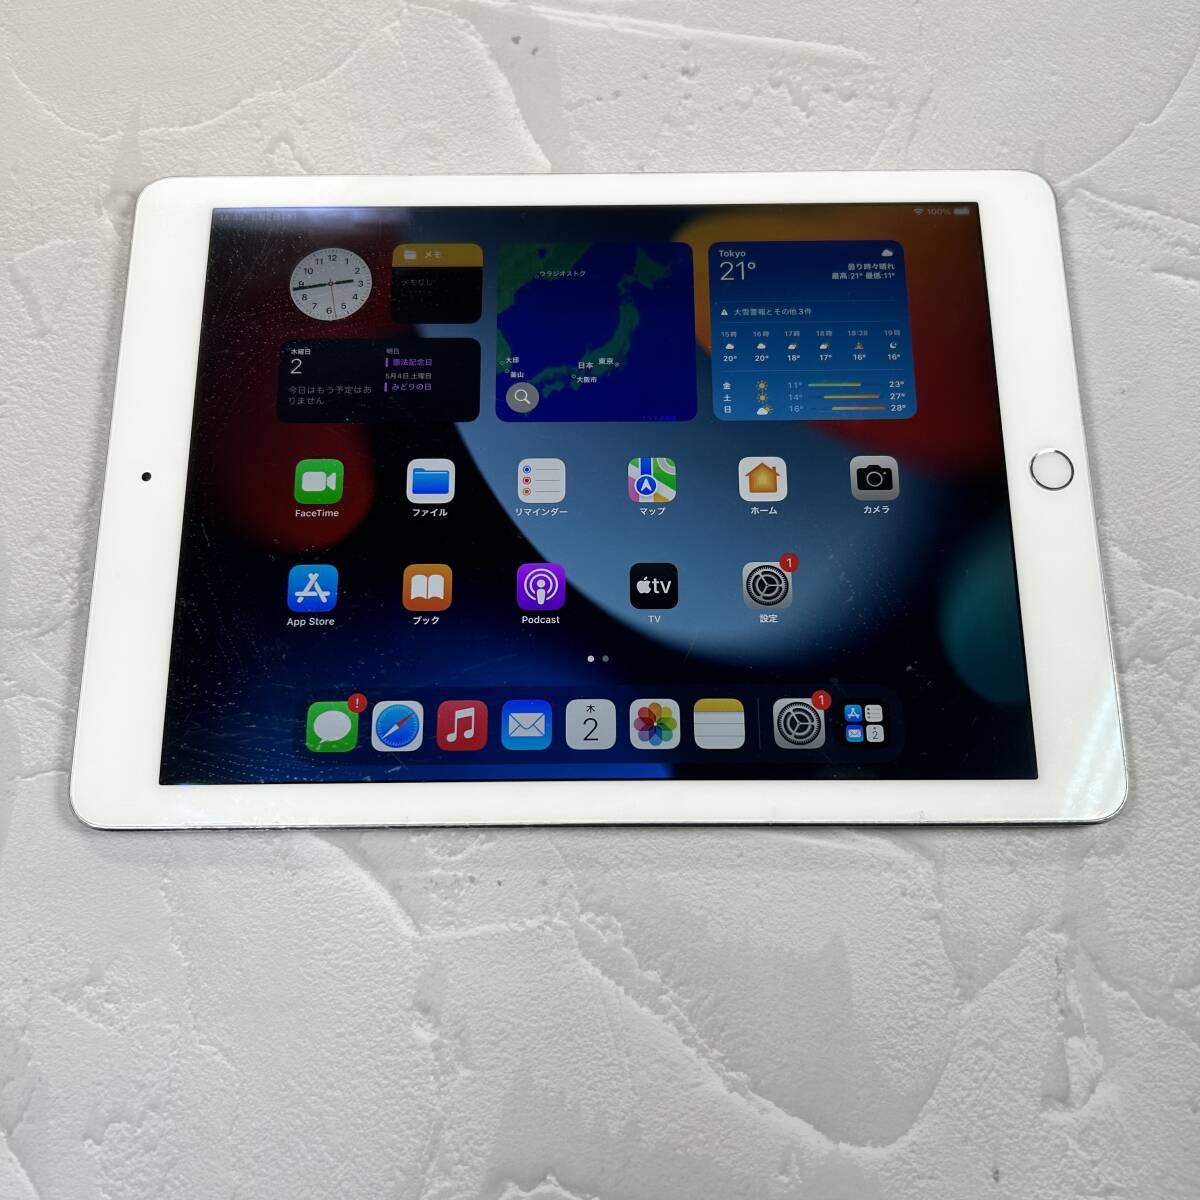 Apple iPad Air 2 Wi-Fi модель 128GB MGTY2J/A